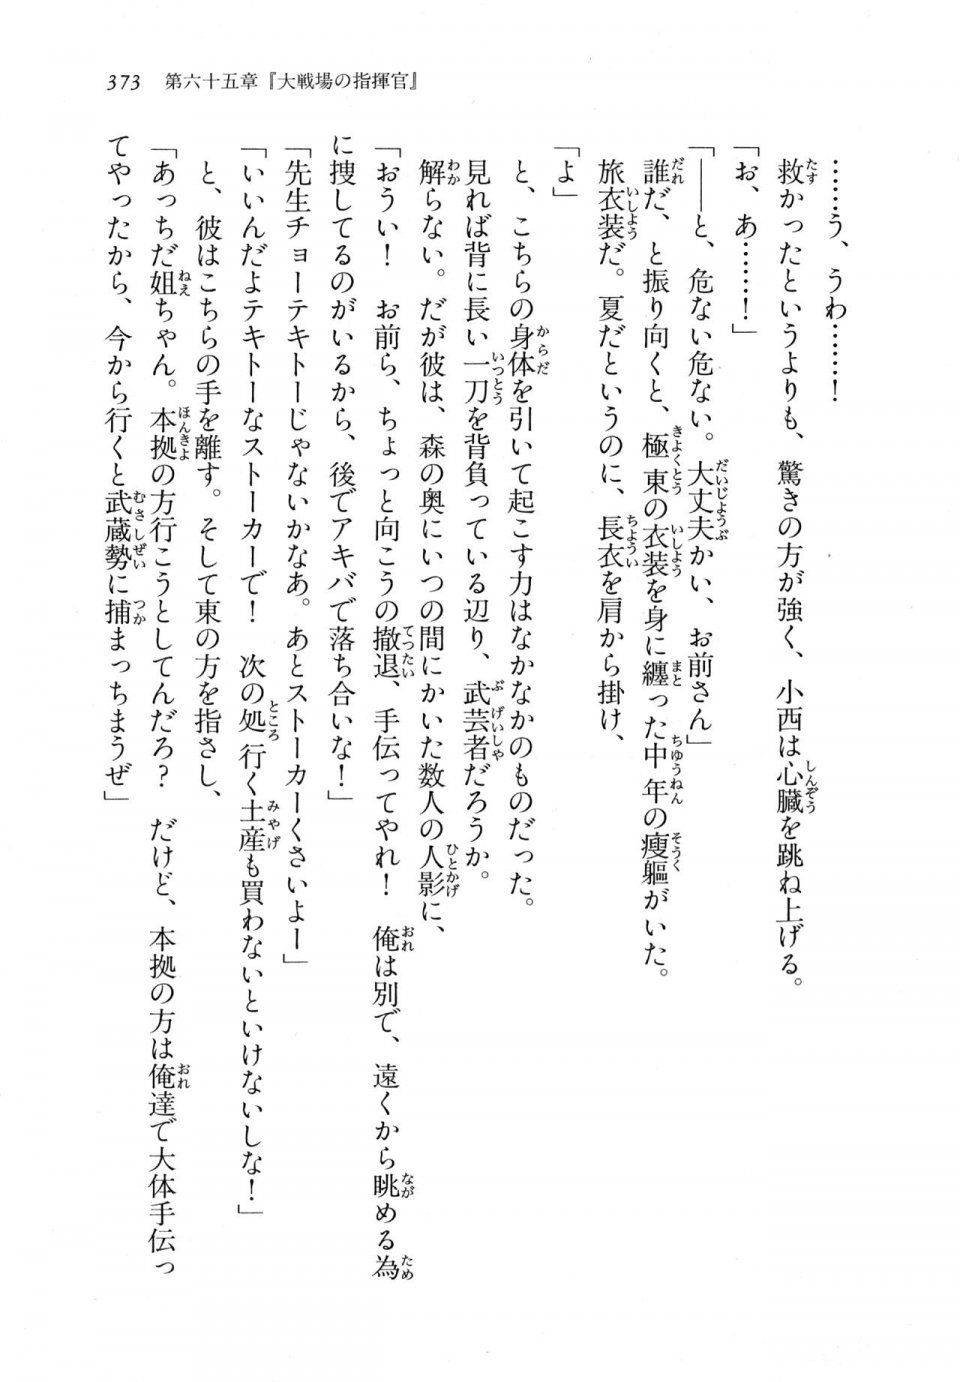 Kyoukai Senjou no Horizon LN Vol 18(7C) Part 1 - Photo #373